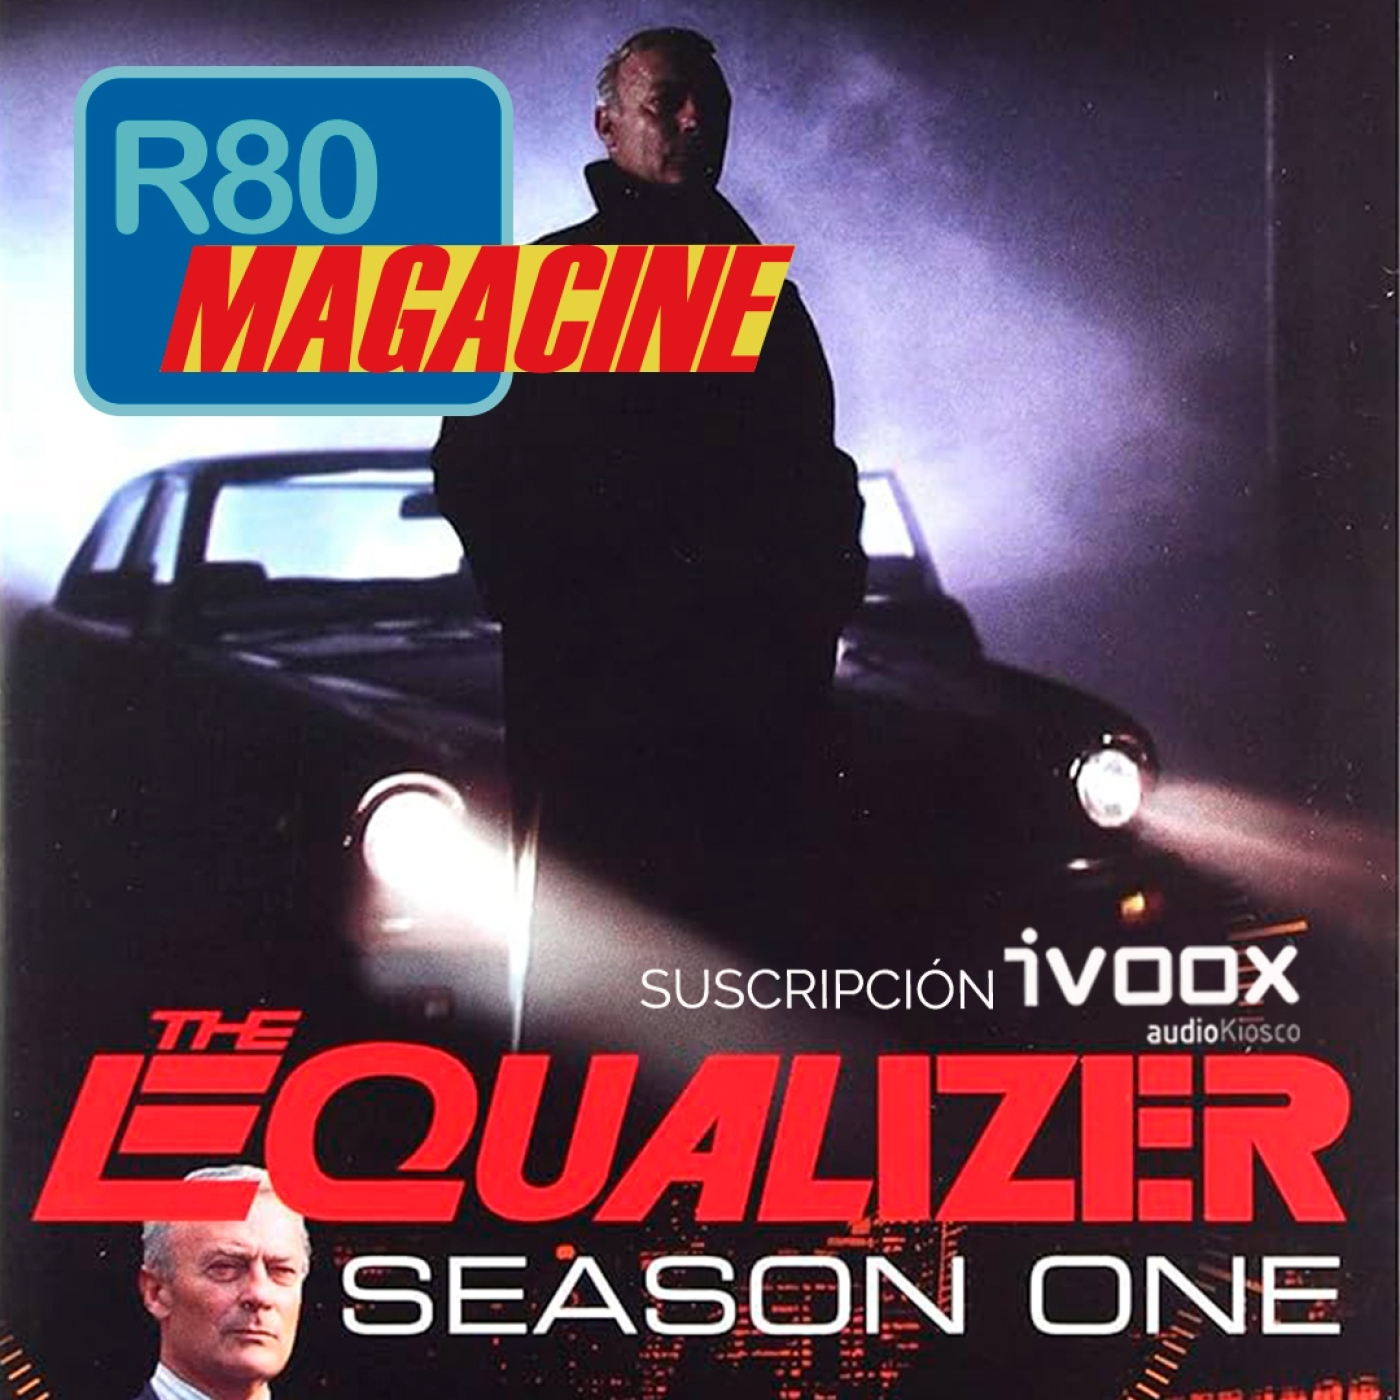 R80 Magacine  ️: THE EQUALIZER (La serie, 1985 - 1989) - Episodio exclusivo para mecenas